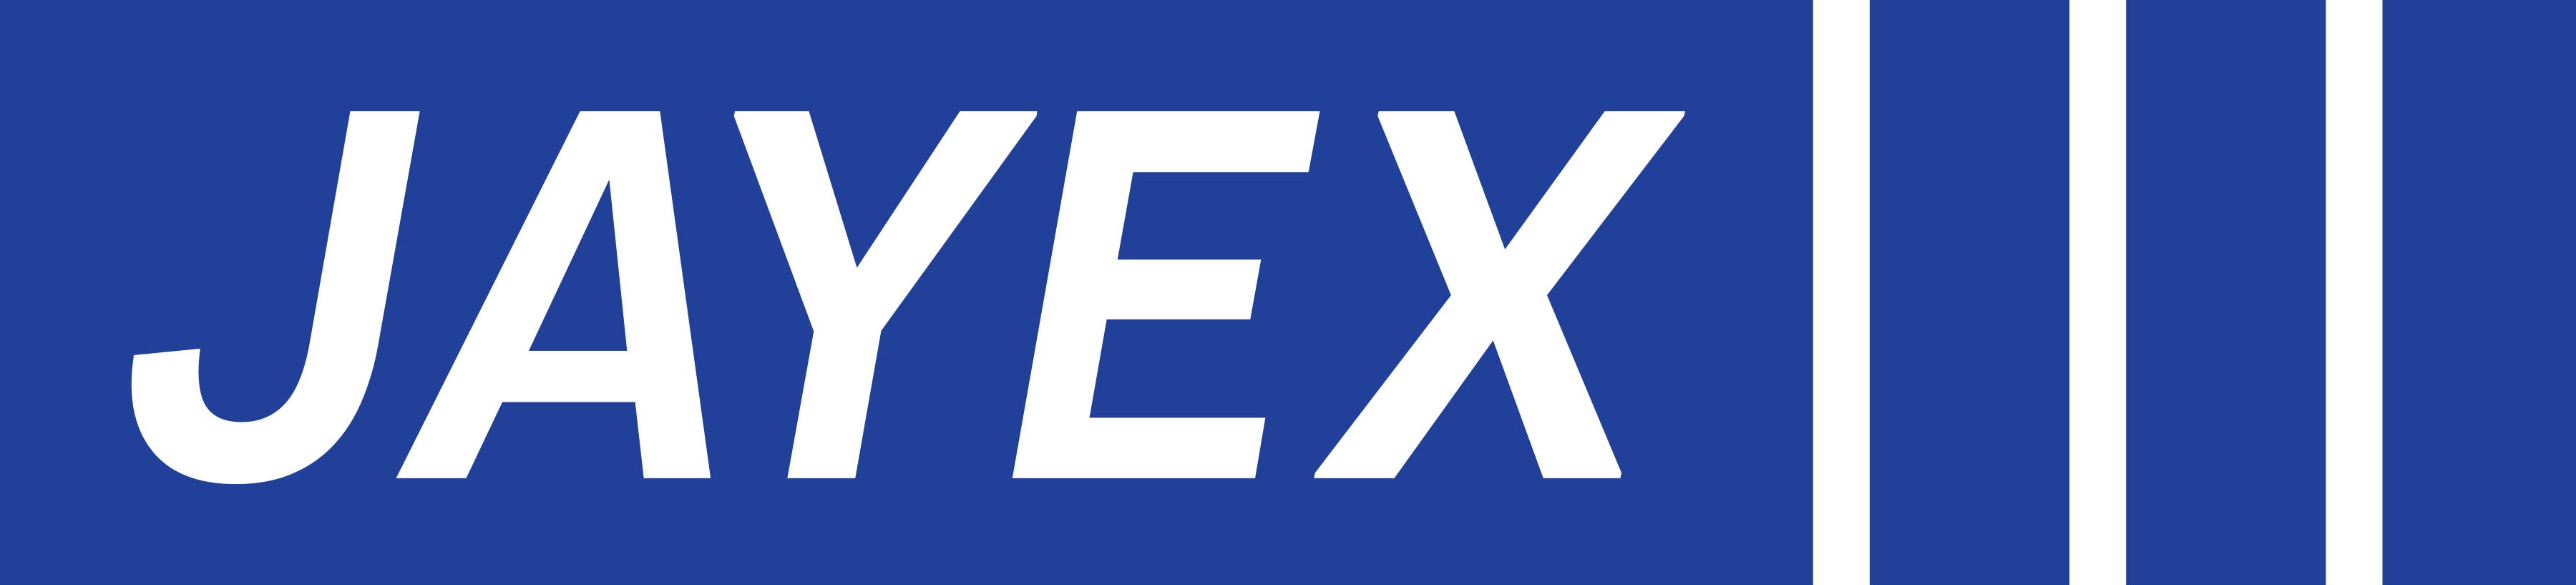 JAYEX_logo_BLUE_SOLIDd